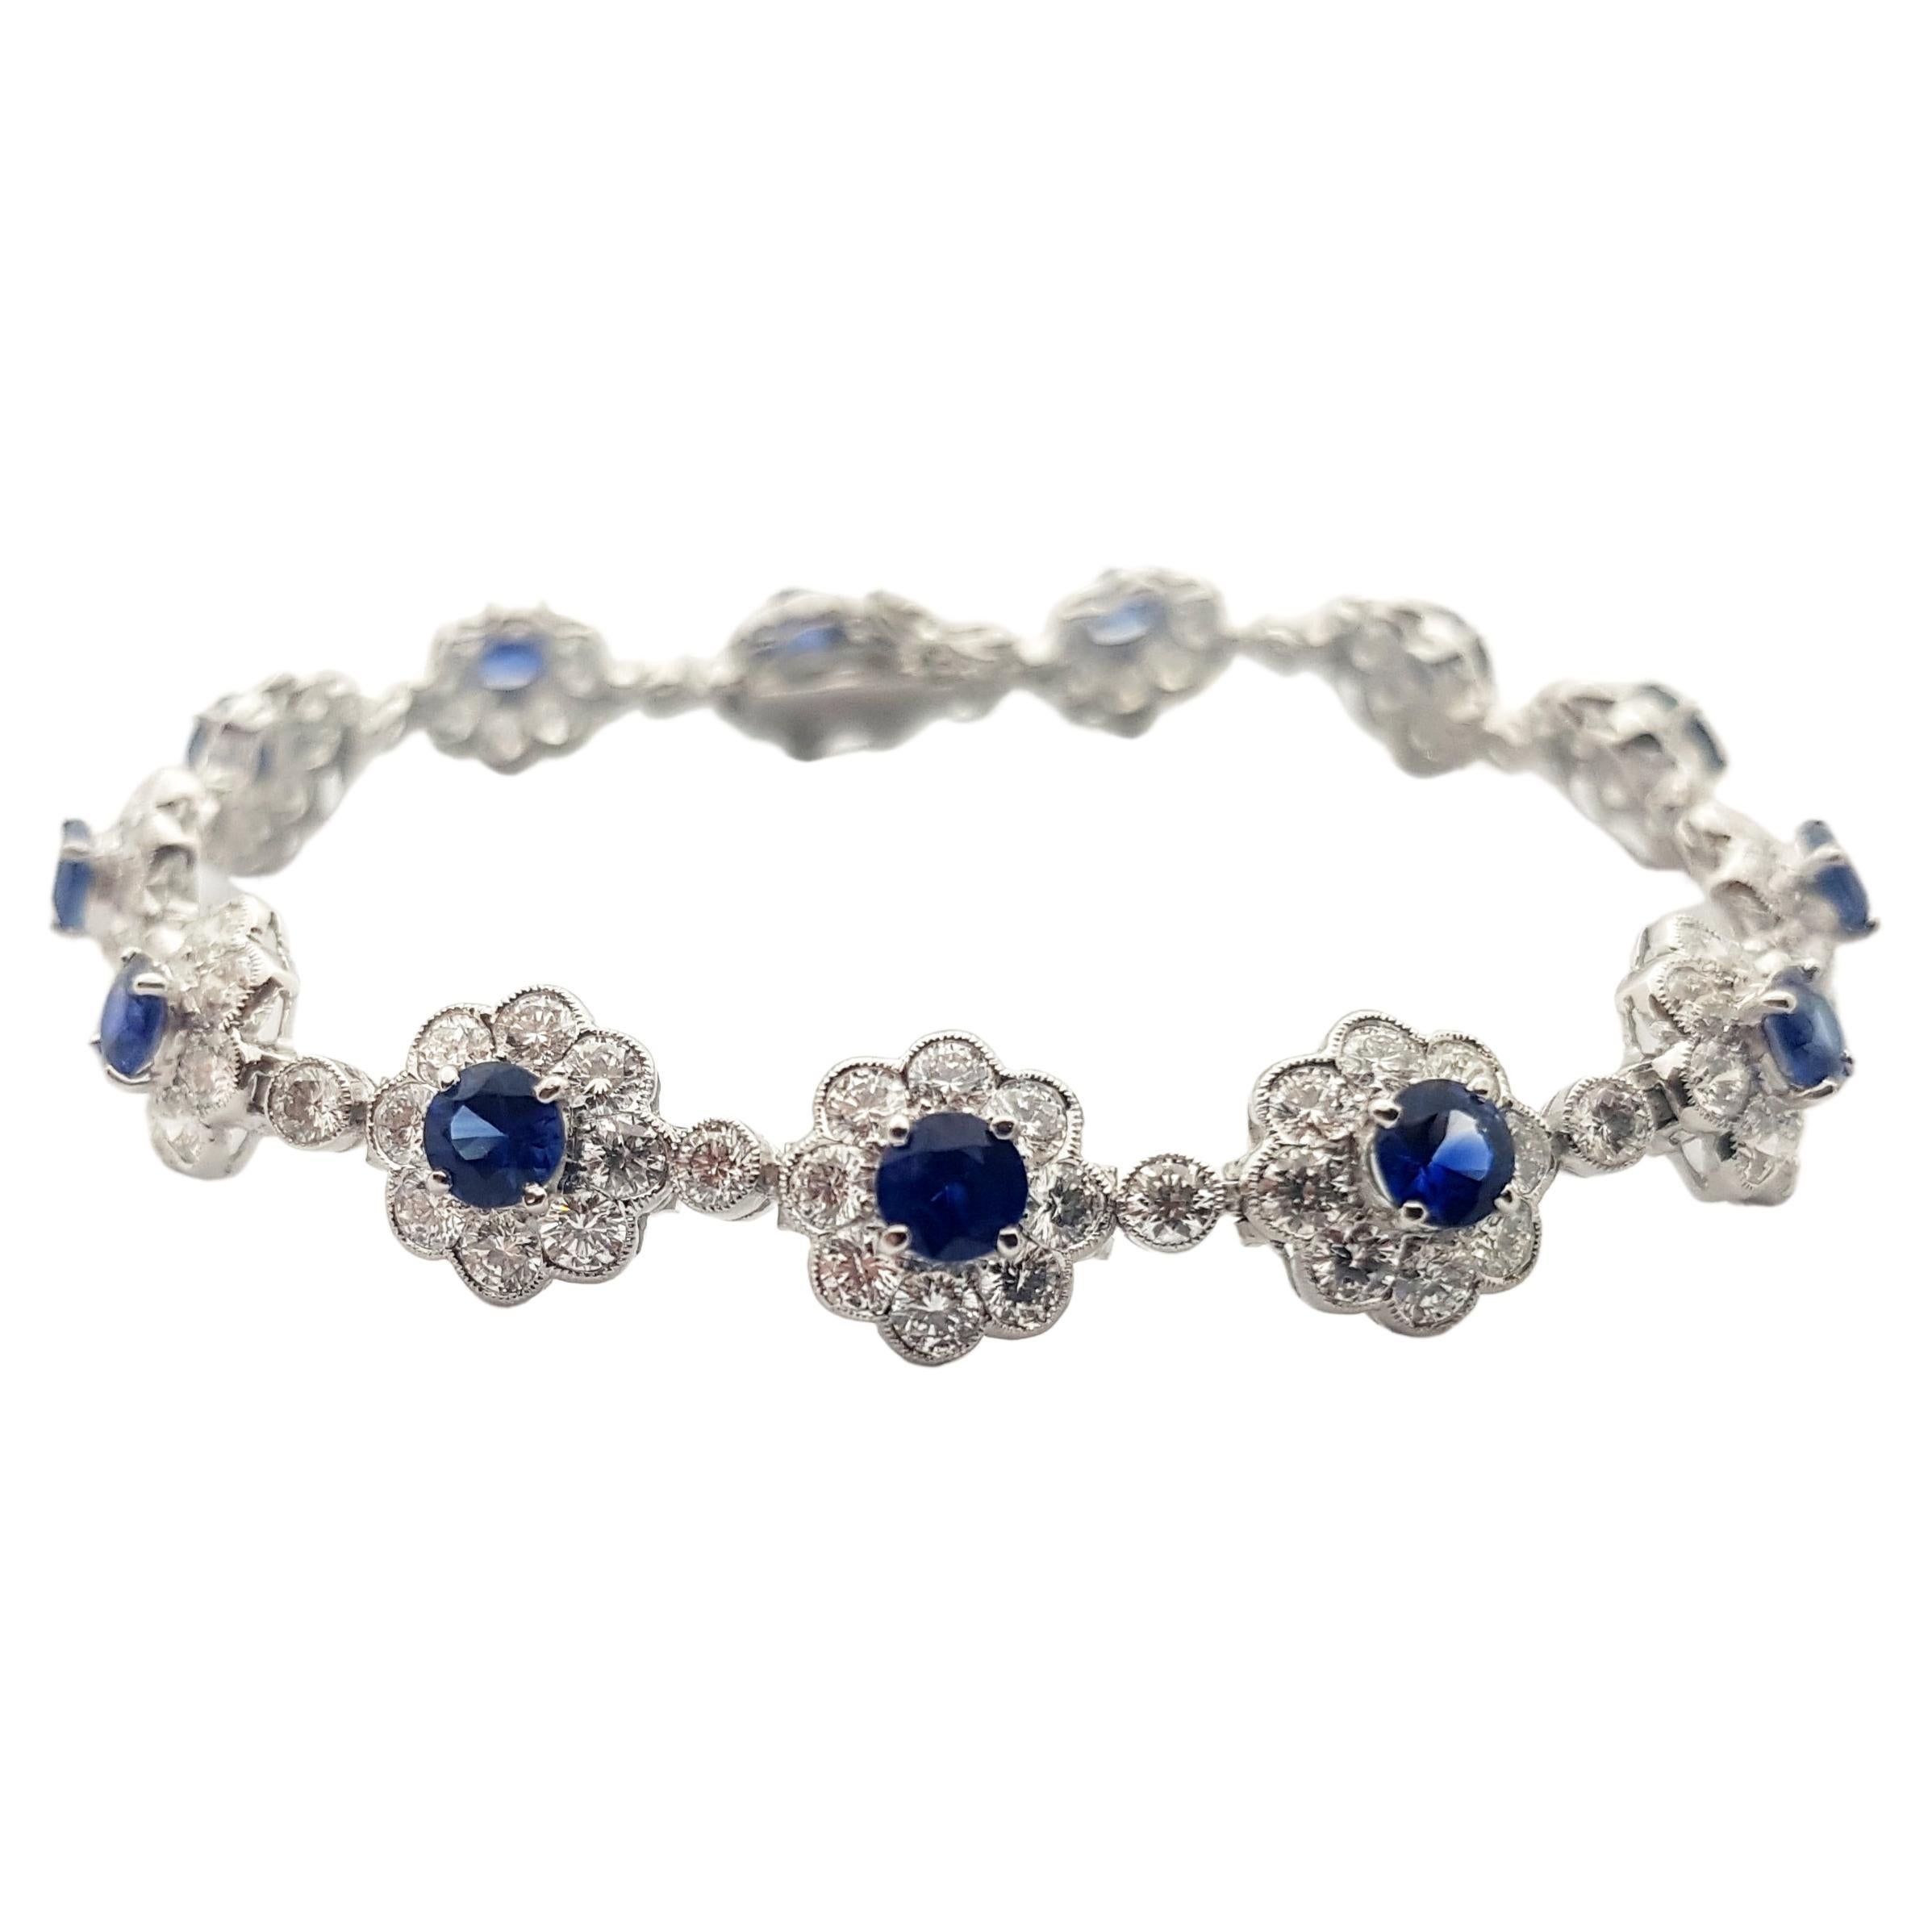 Blue Sapphire with Diamond Bracelet Set in 18 Karat White Gold Settings